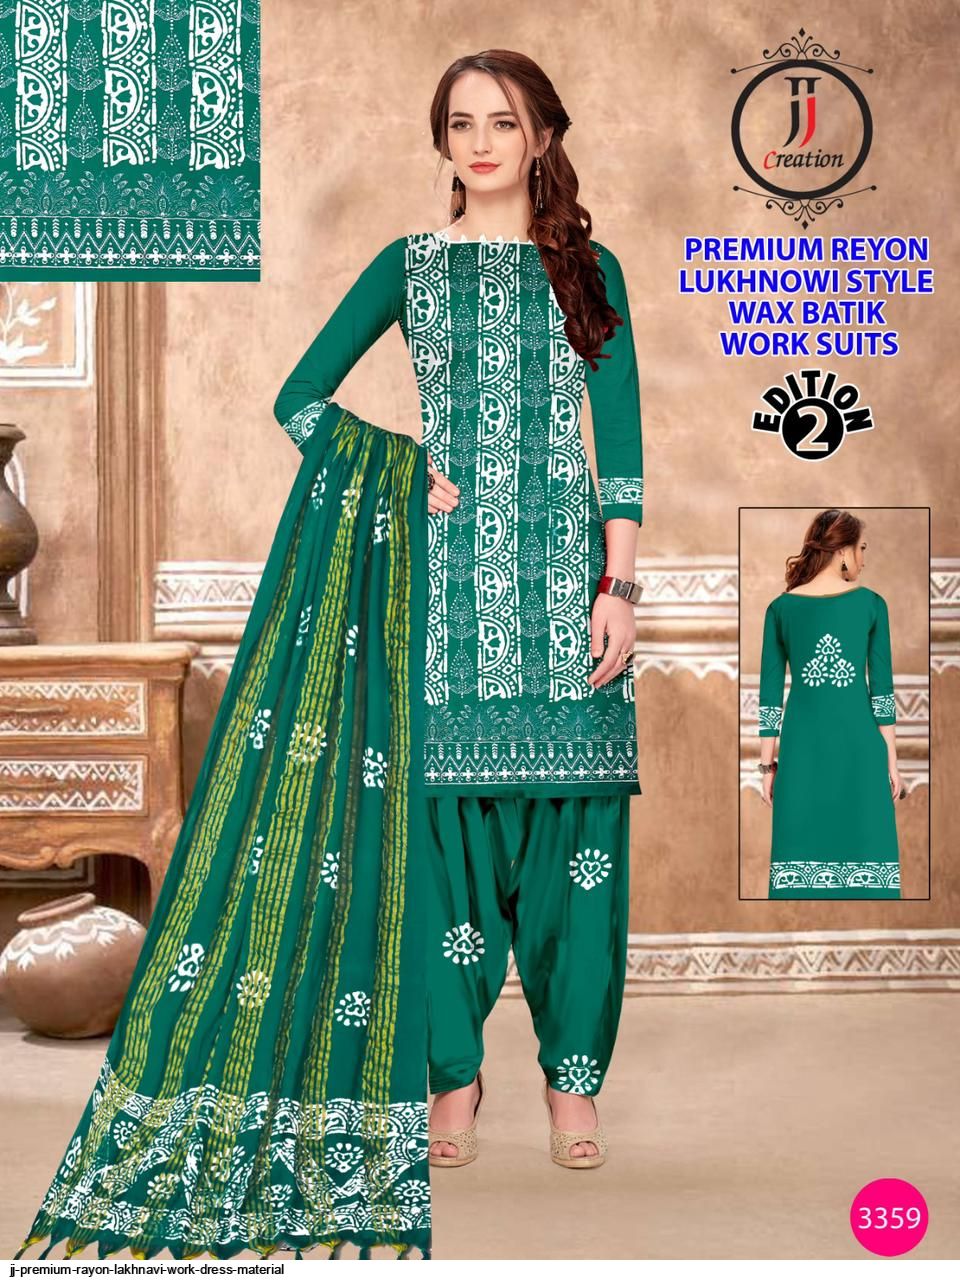 Zara Handloom Viscose Rayon Printed Salwar Suit Material Price in India -  Buy Zara Handloom Viscose Rayon Printed Salwar Suit Material online at  Flipkart.com